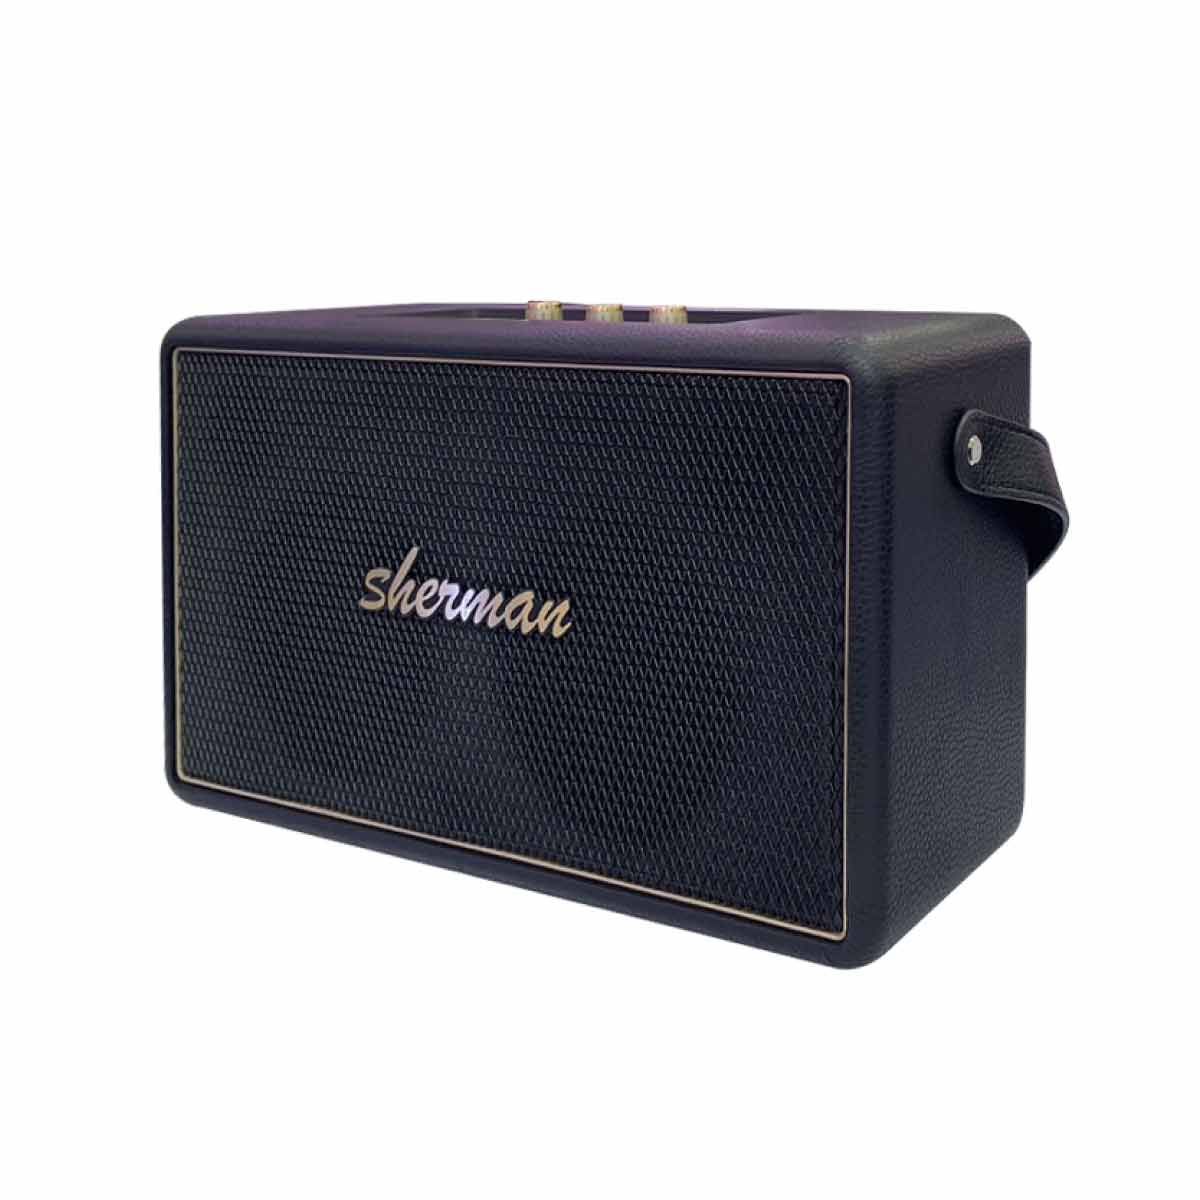 SHERMAN ลำโพง Bluetooth 50W 2.1CH รุ่น SB-77B2B+  ลำโพง Bluetooth Speaker